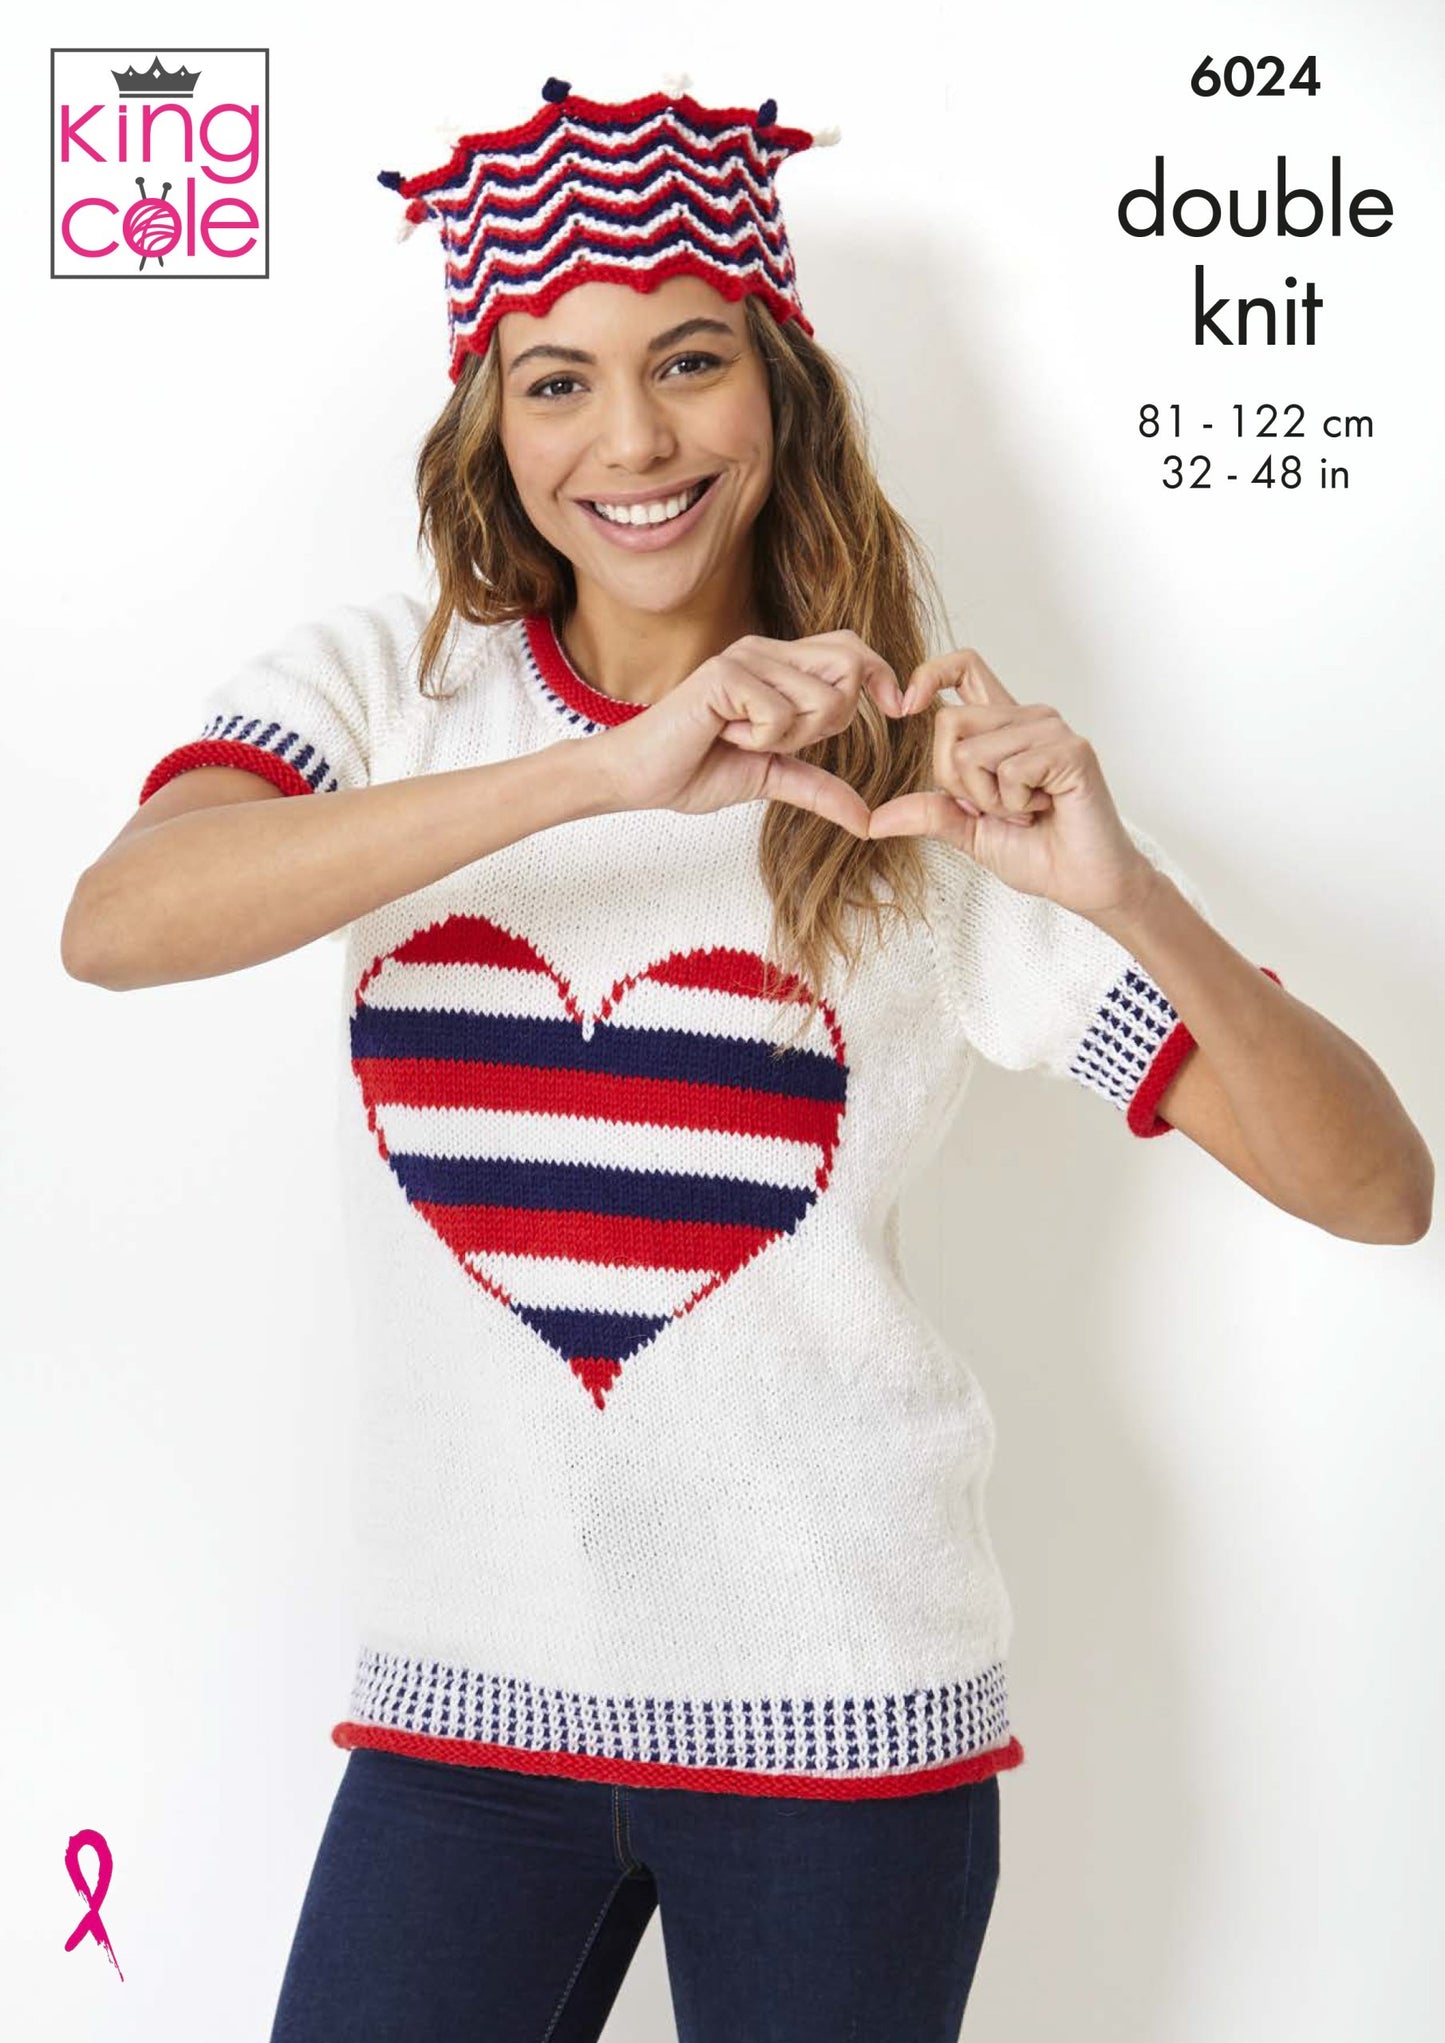 Knitting Pattern 6024 - Sweater, Tank Top, & Crown Knitted in Merino Blend DK